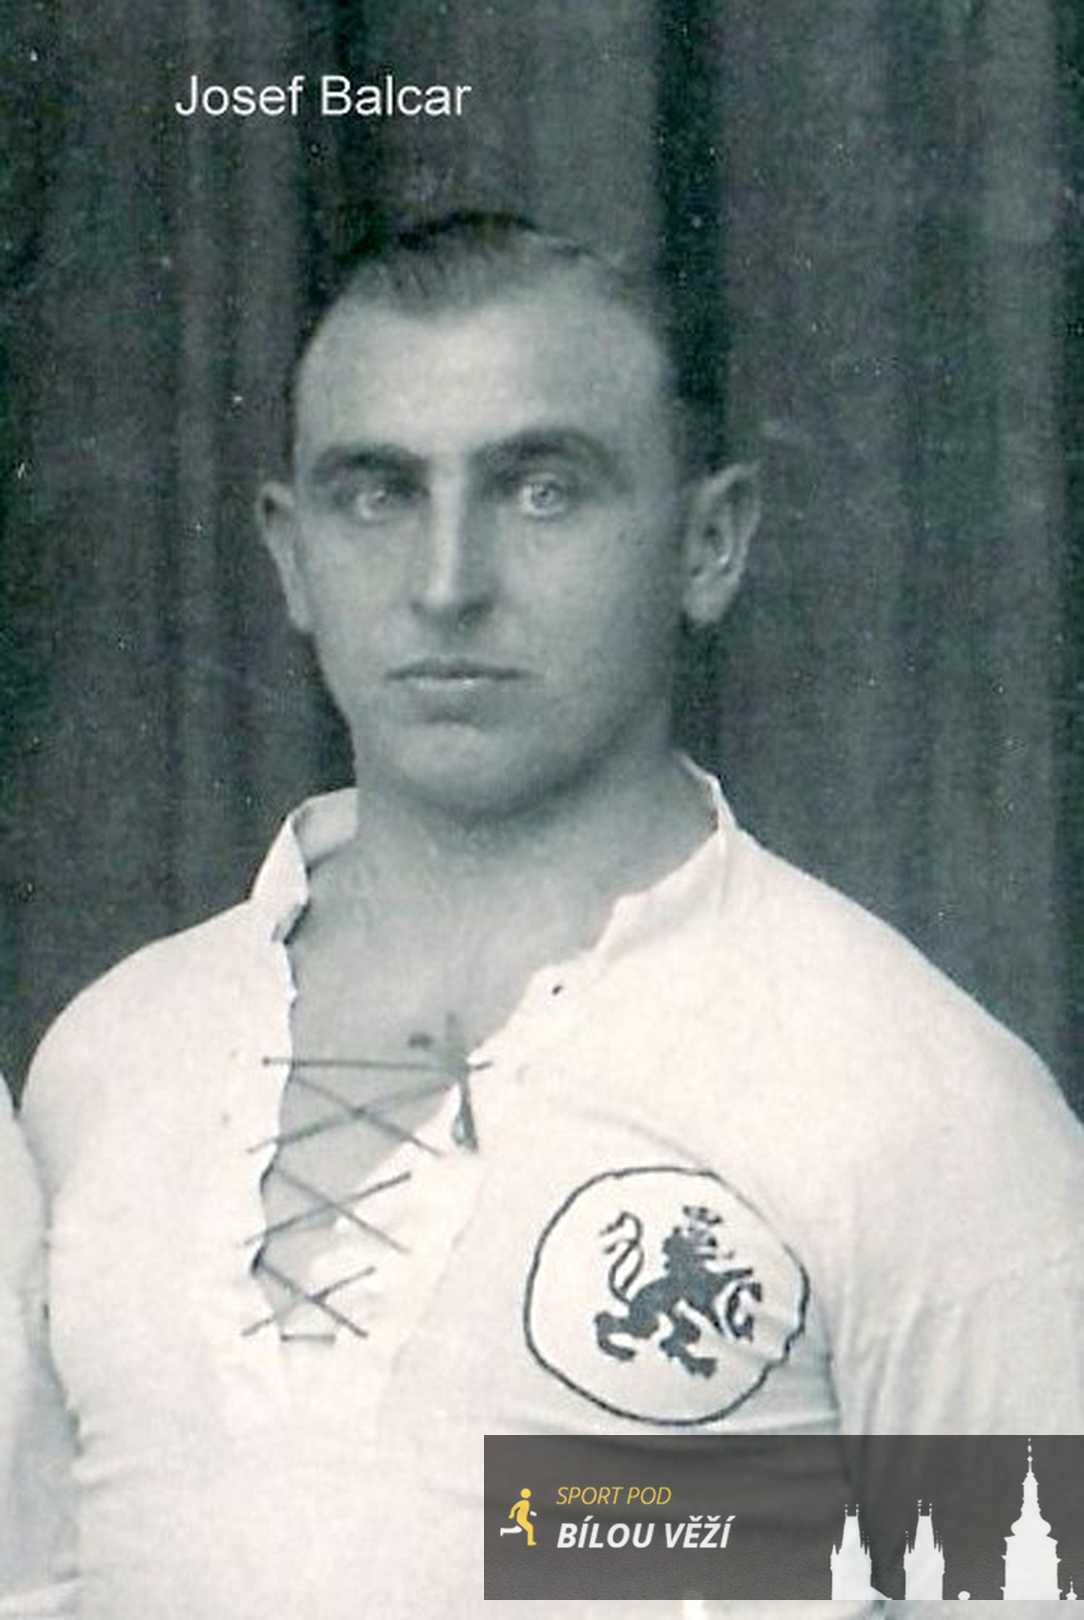 Josef Balcar